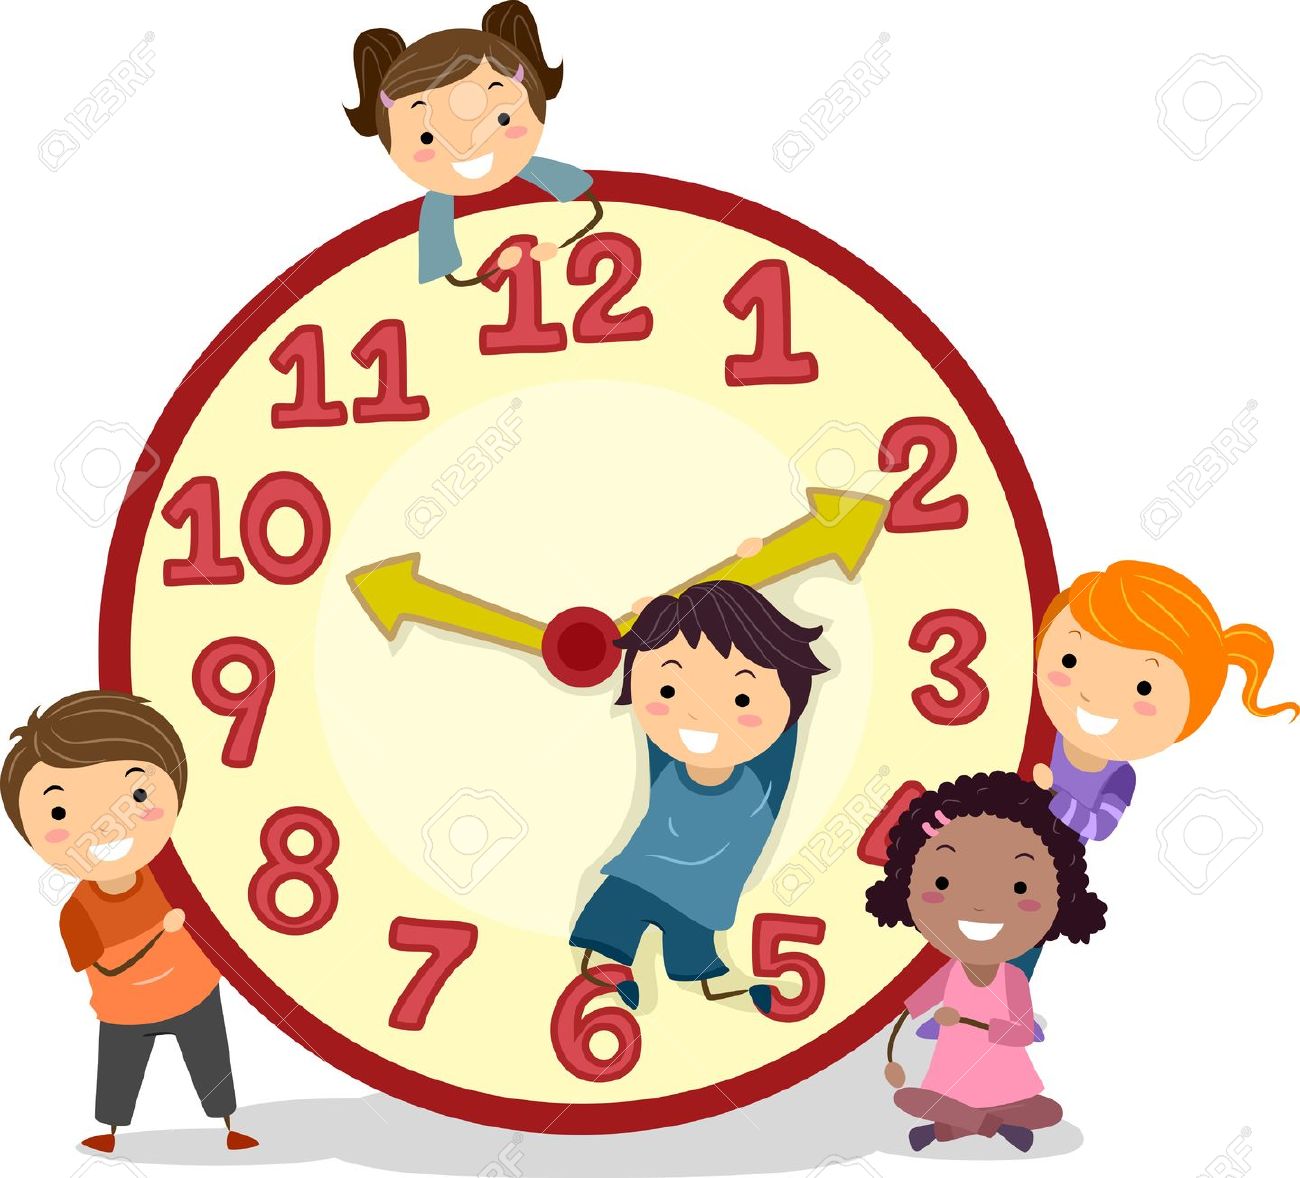 School time clock clipart.